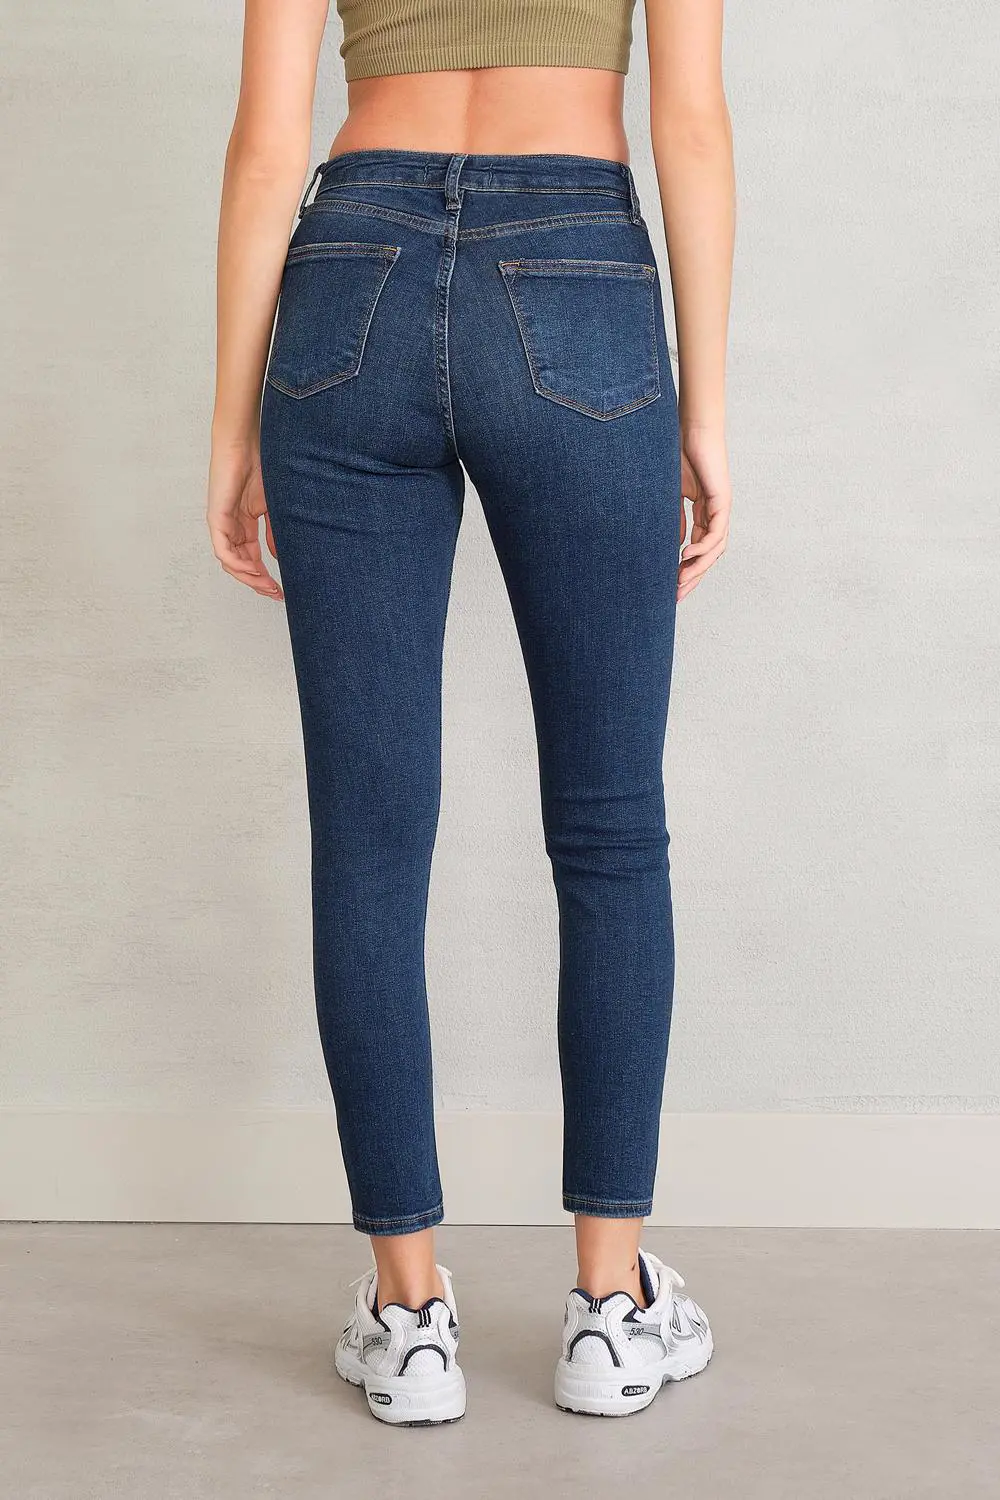 Addax Yüksek Bel Skinny Jean Pantolon. 2